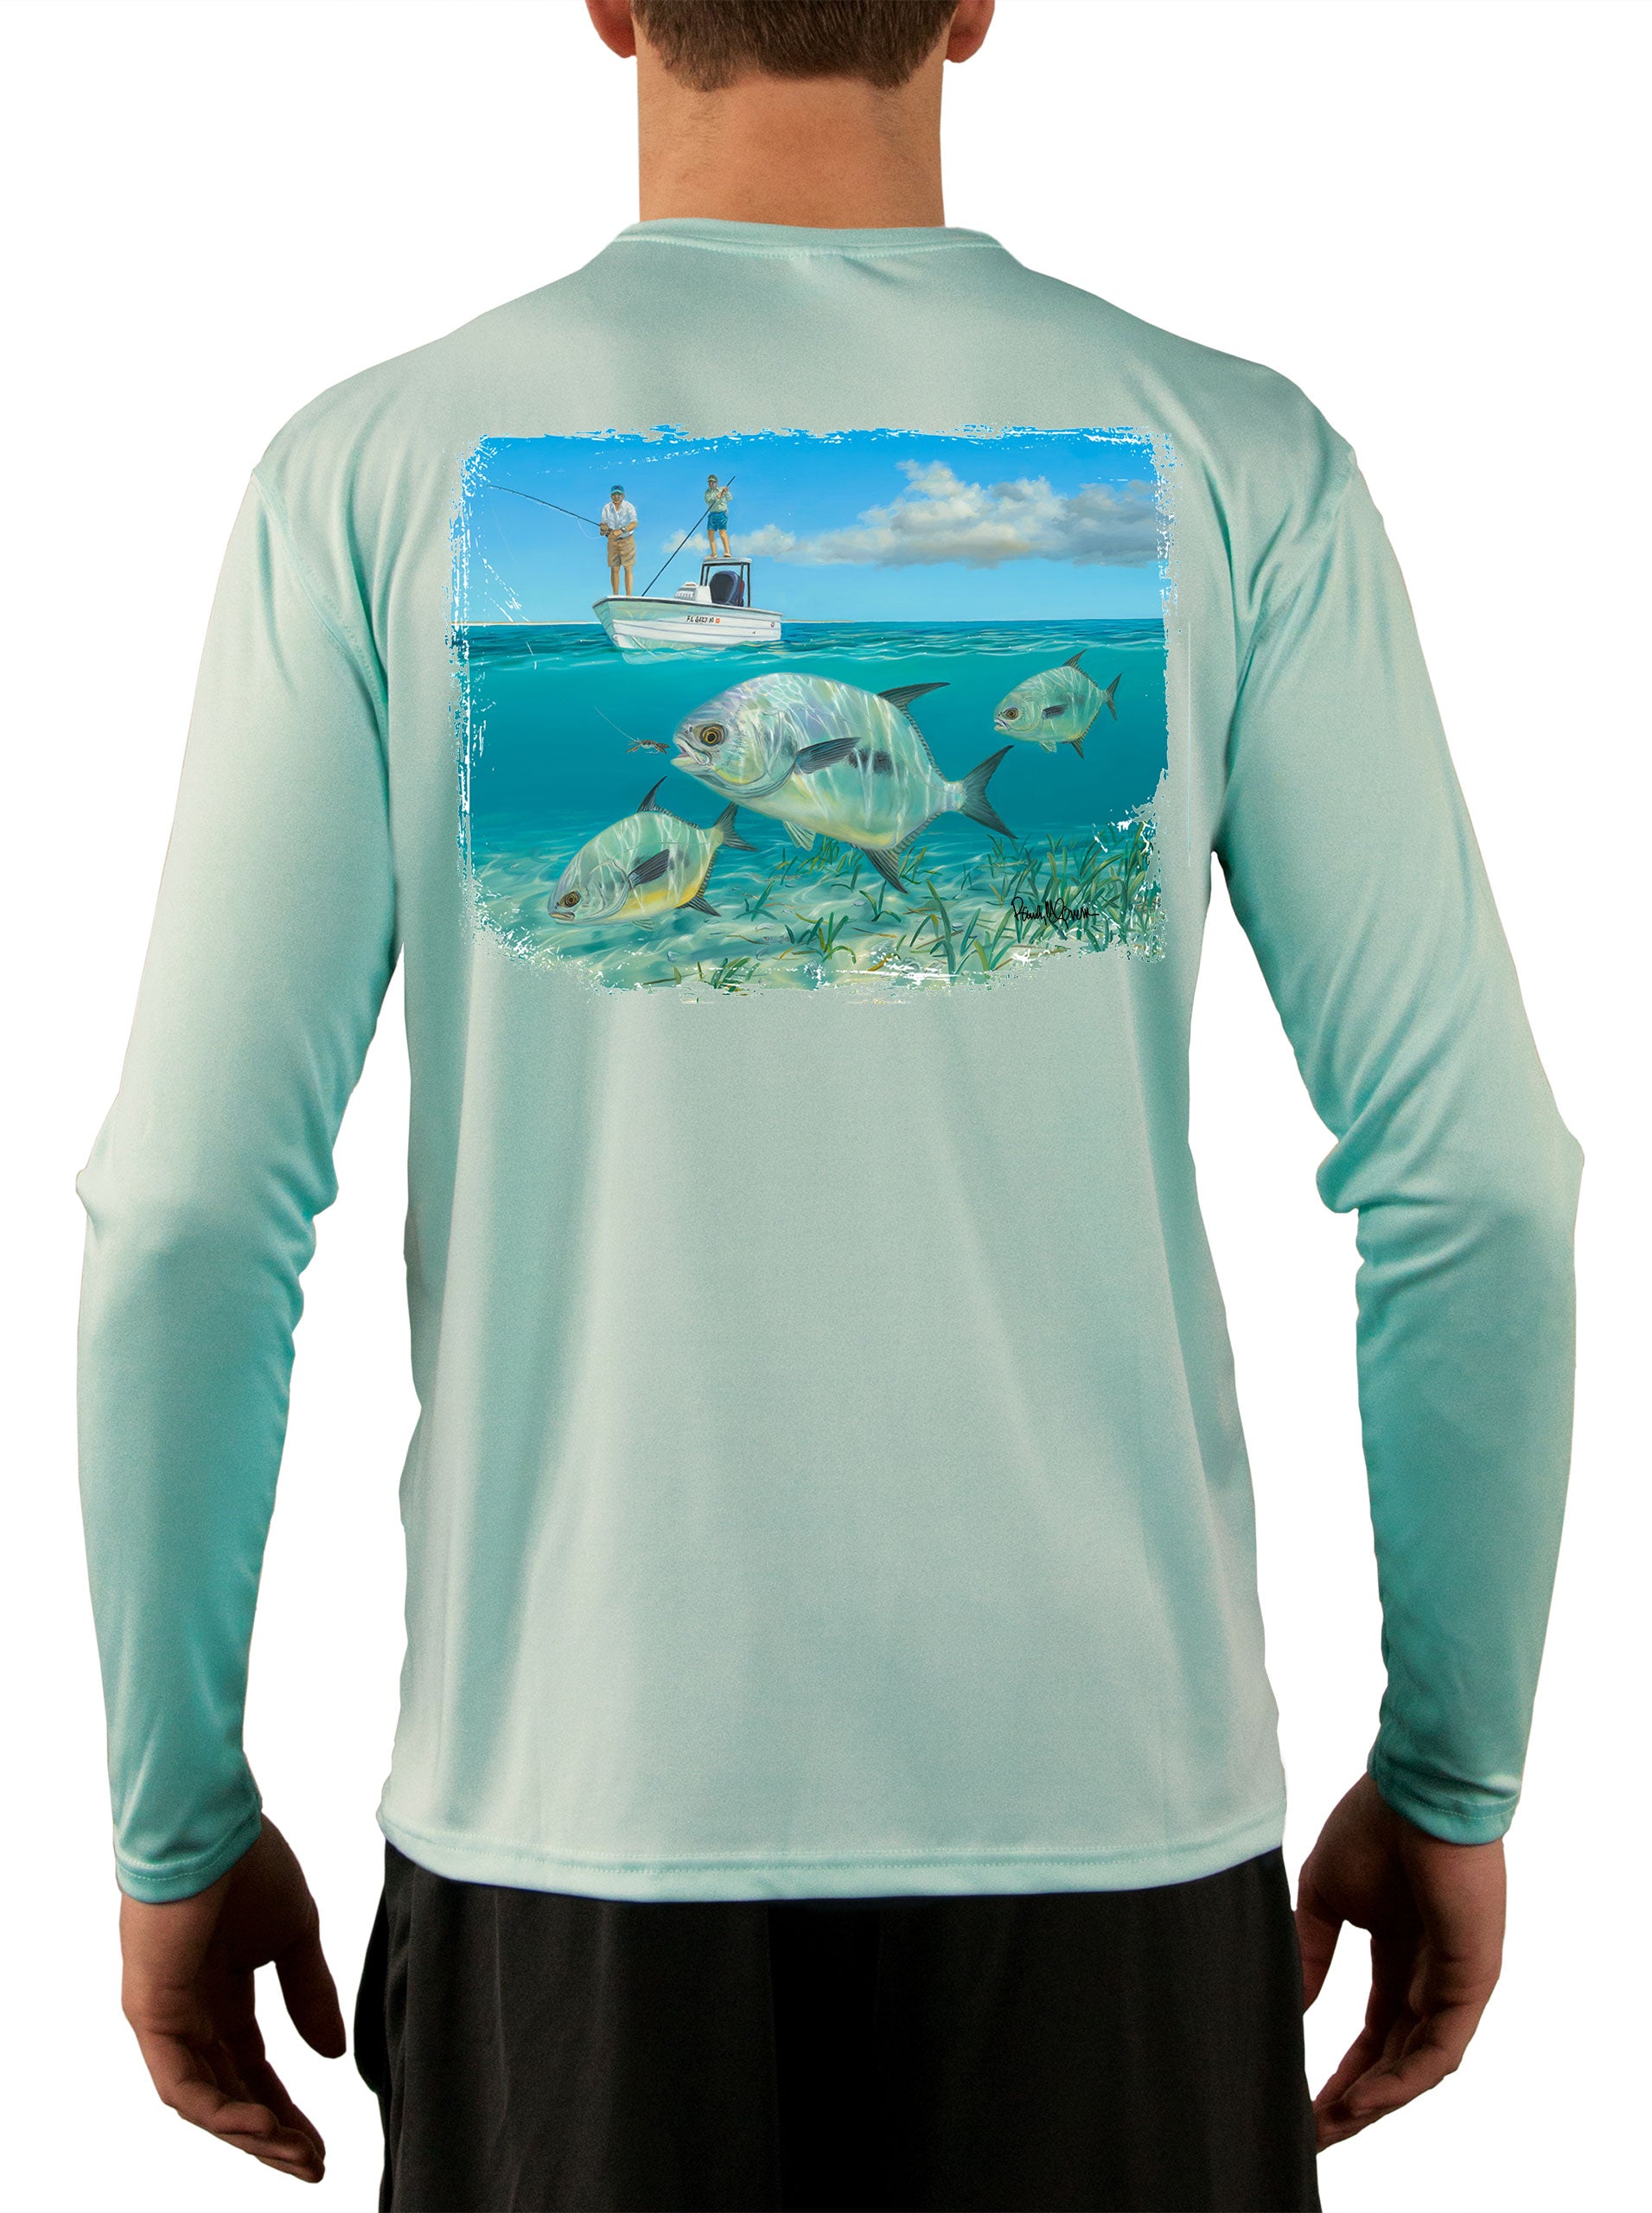 Permit Paradise Lappy Nation Skiff Life Fishing Shirts For Men - Skiff Life